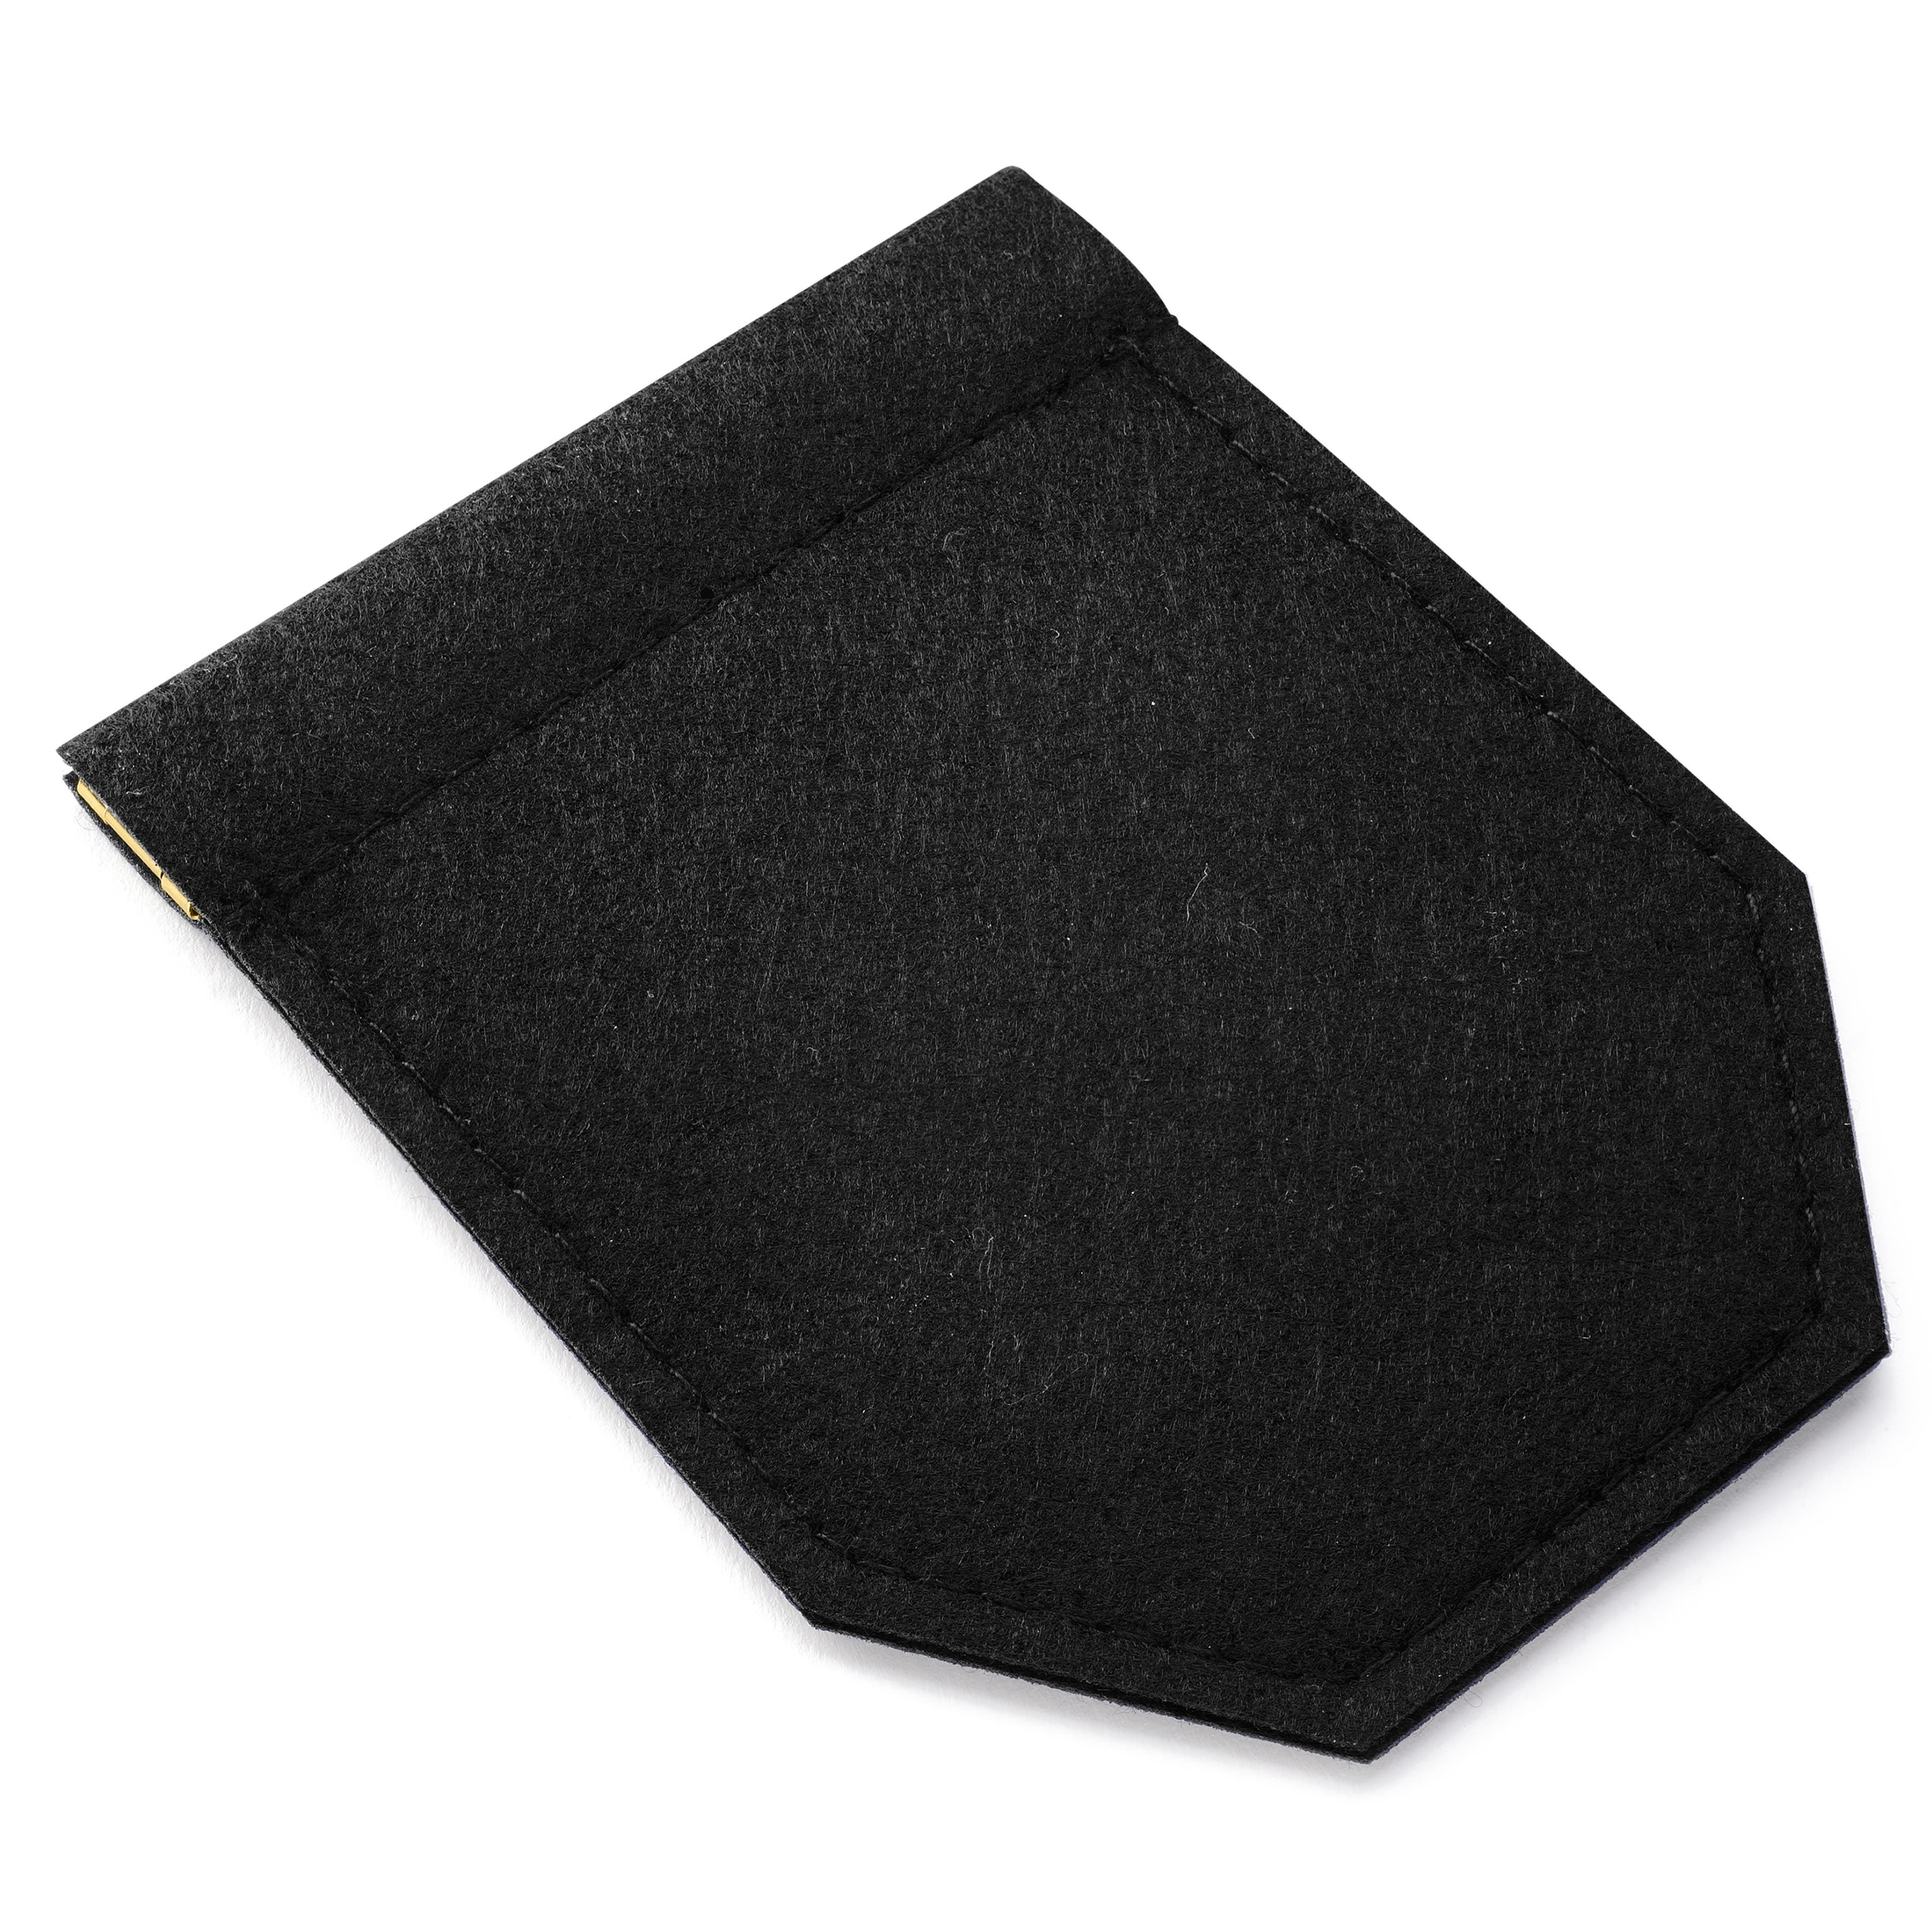 Soporte para pañuelos de bolsillo de fieltro negro